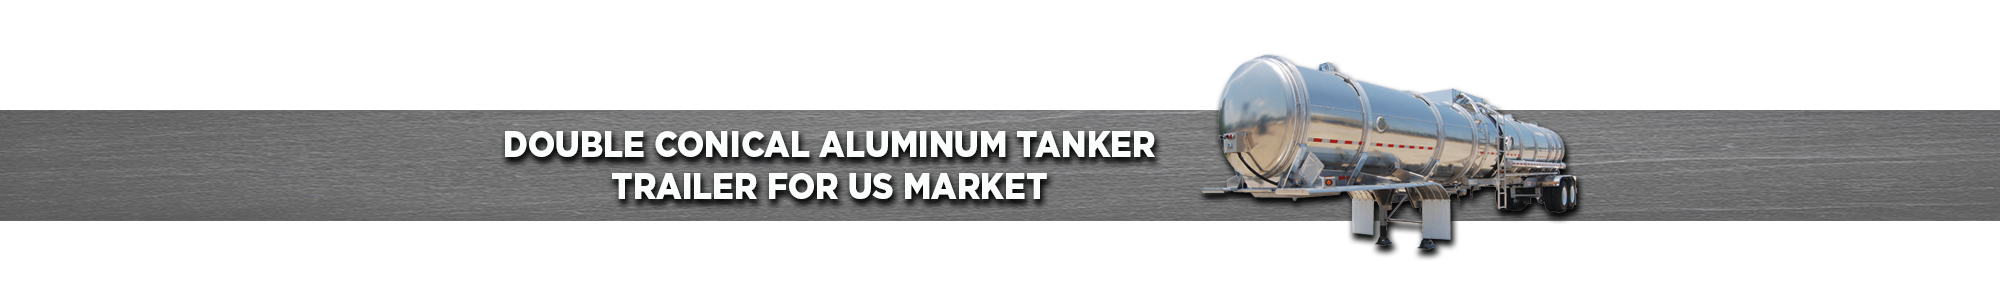 Double Conical Aluminum Tanker Trailer for US Market